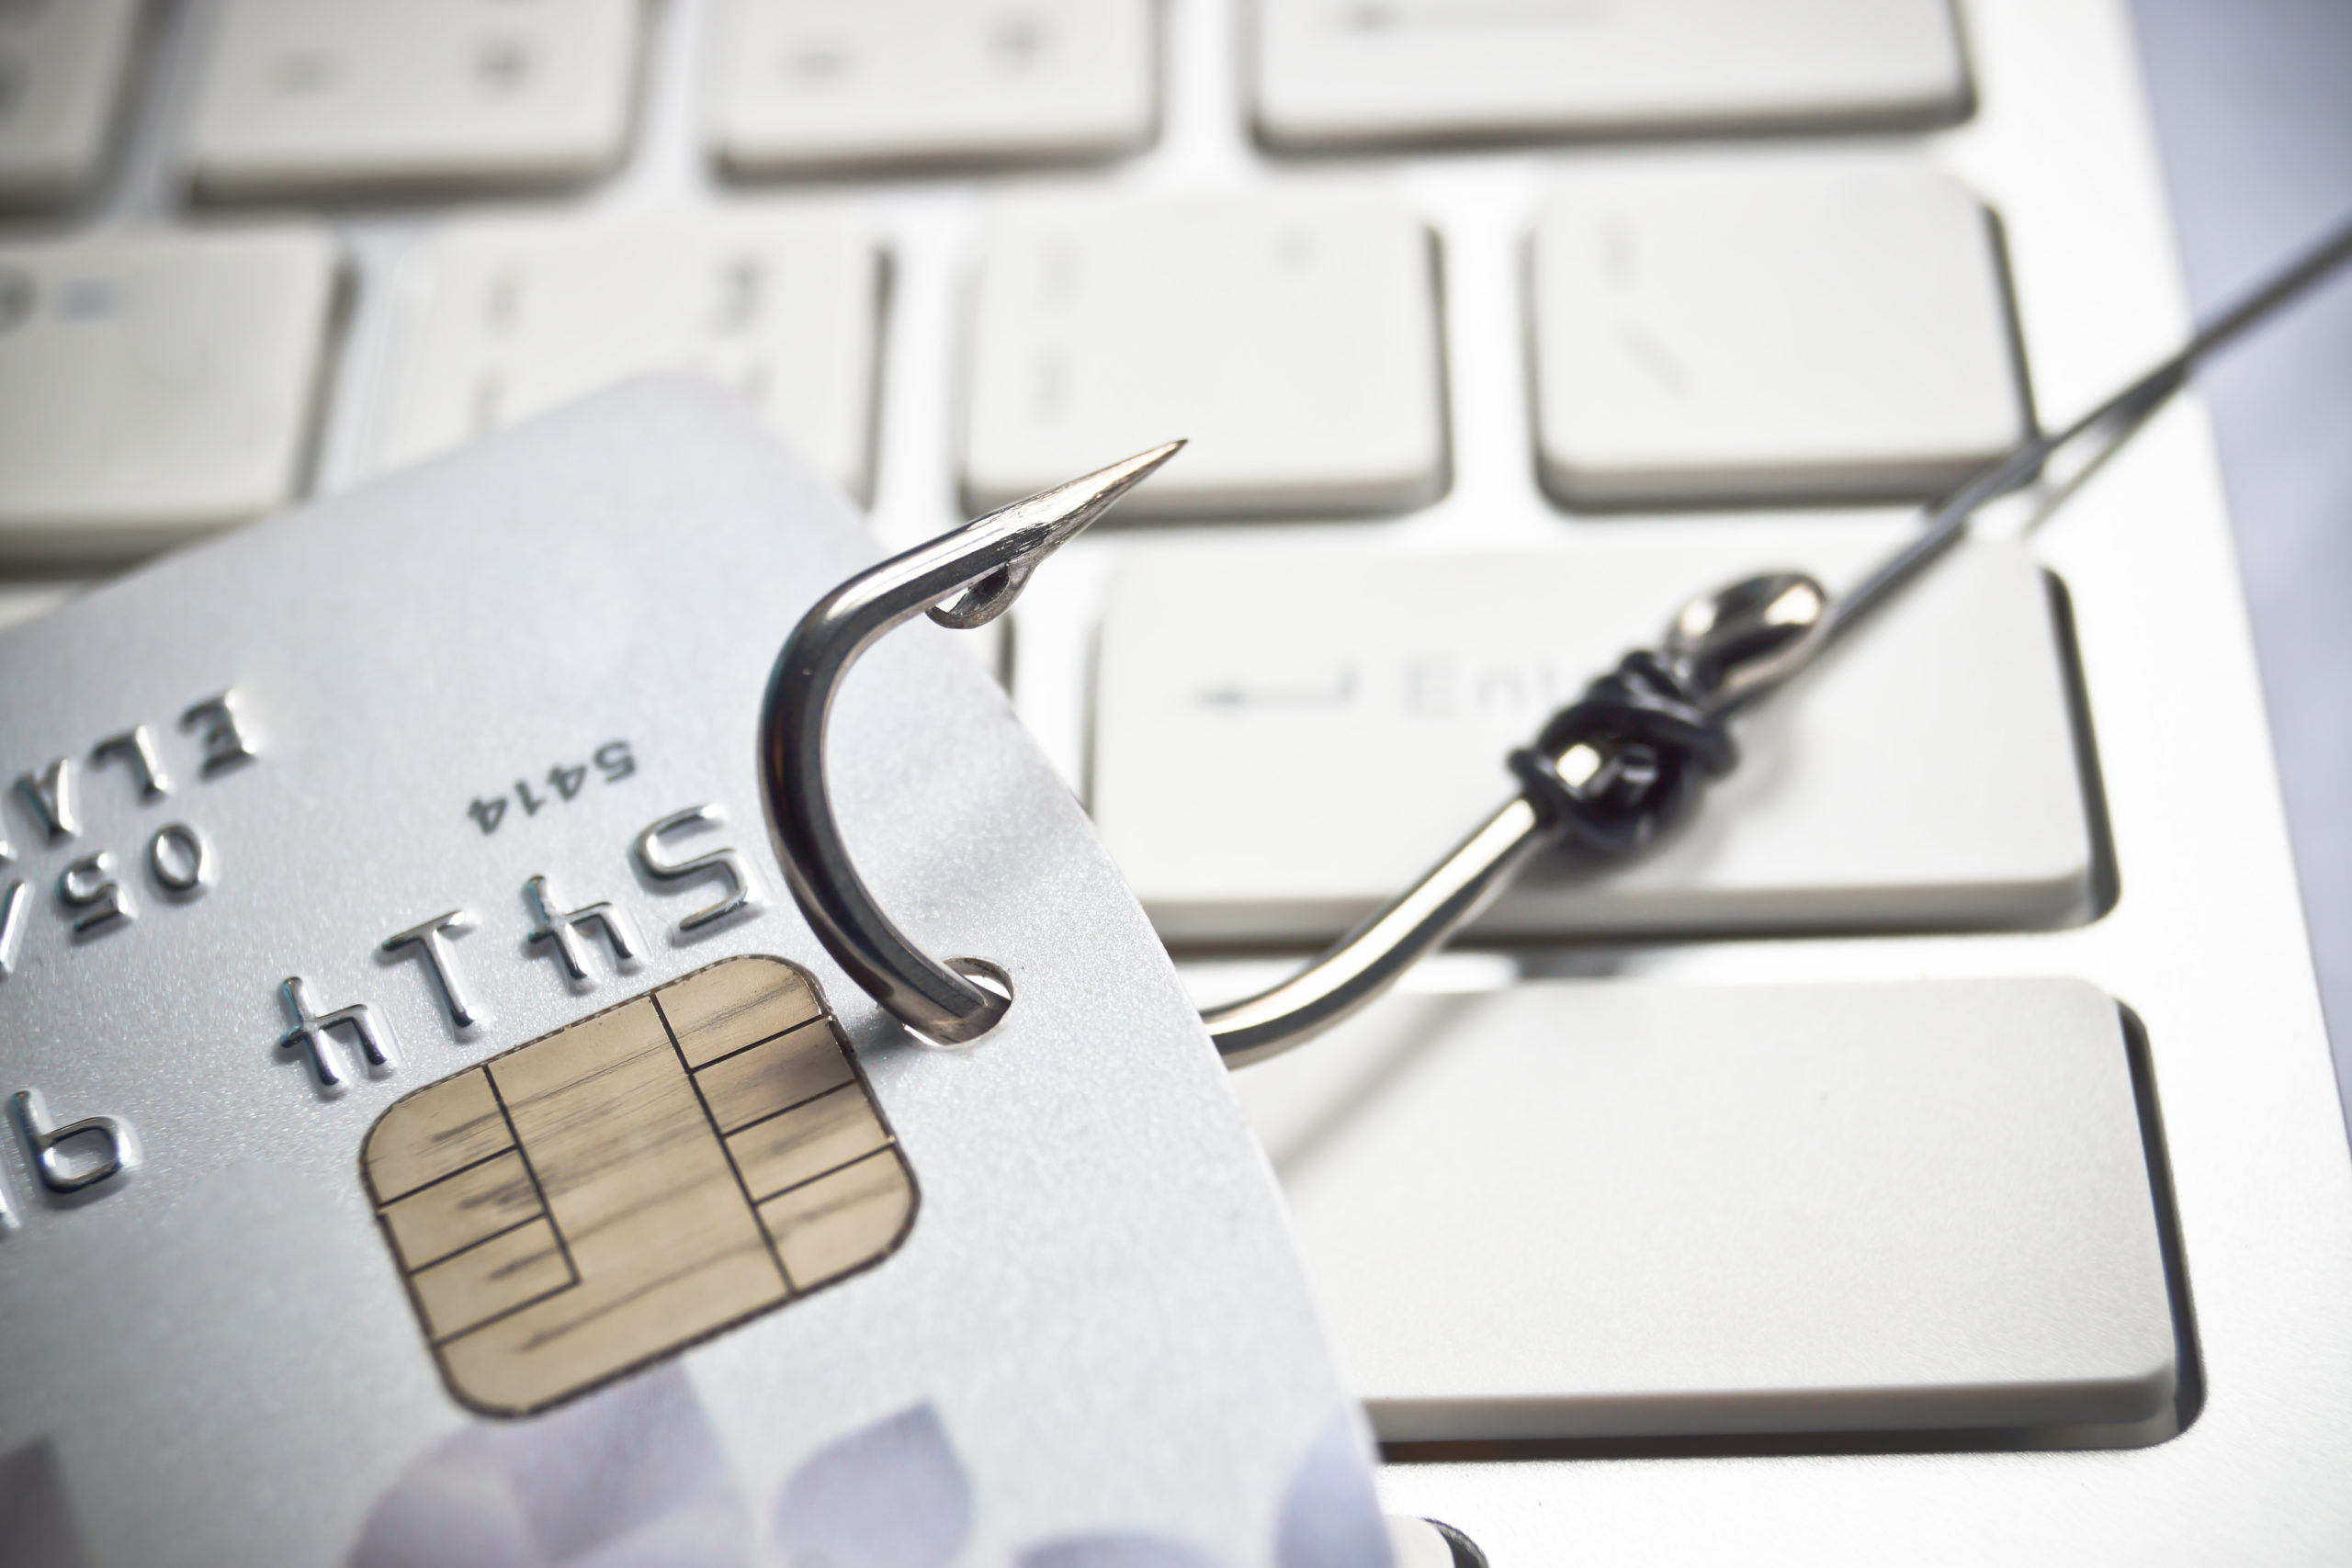 phishing internet scams